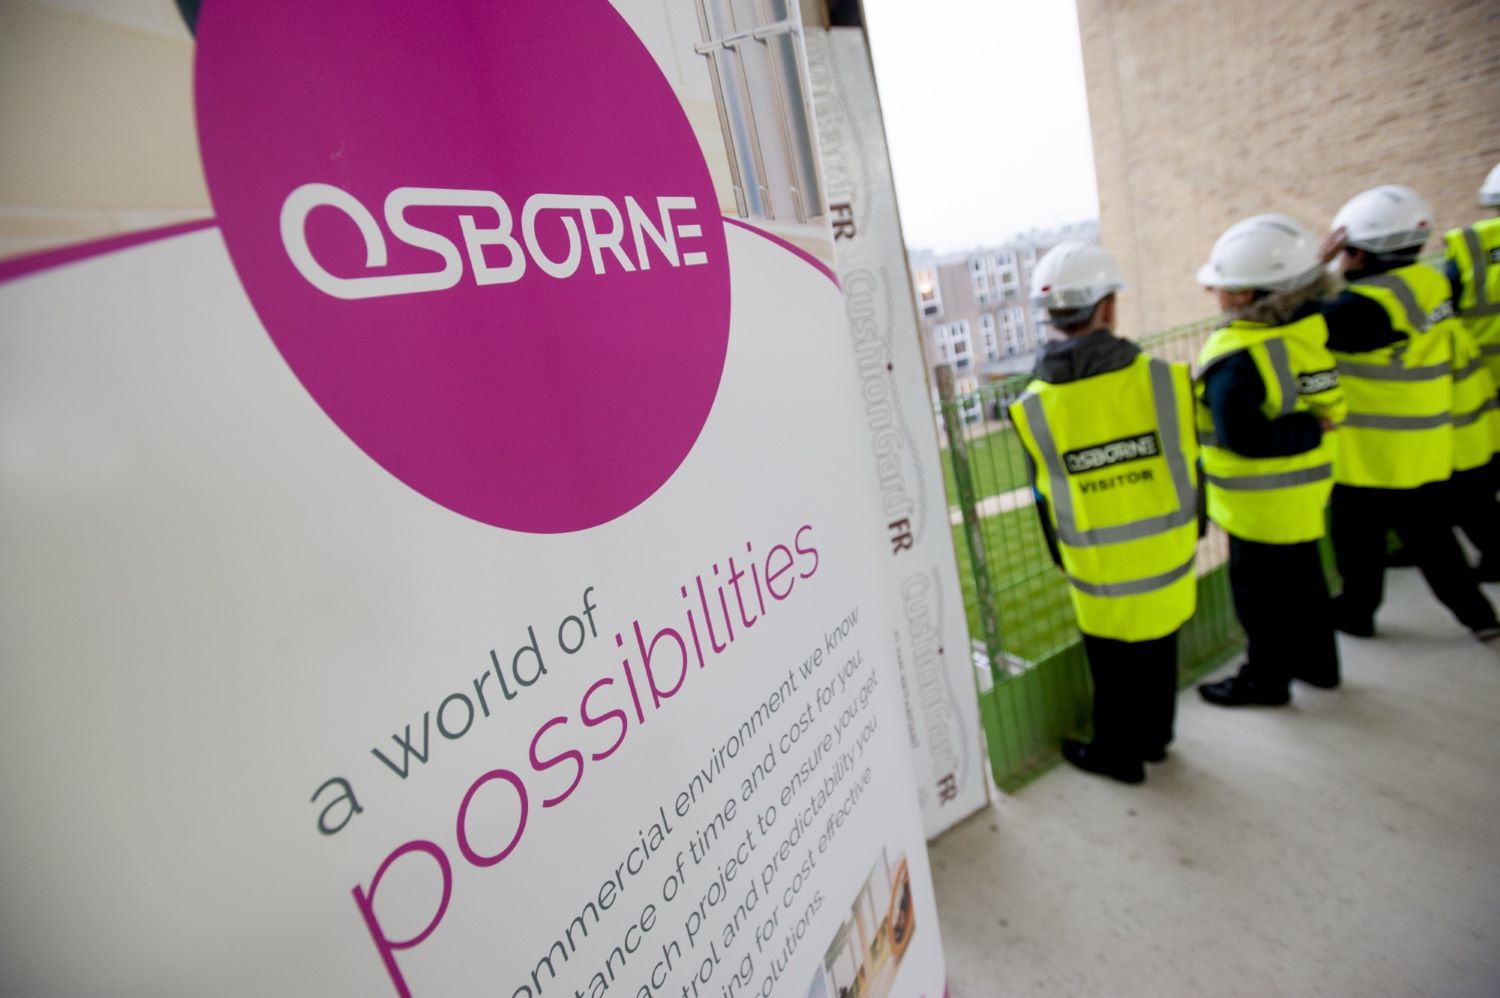 Osborne Construction workers